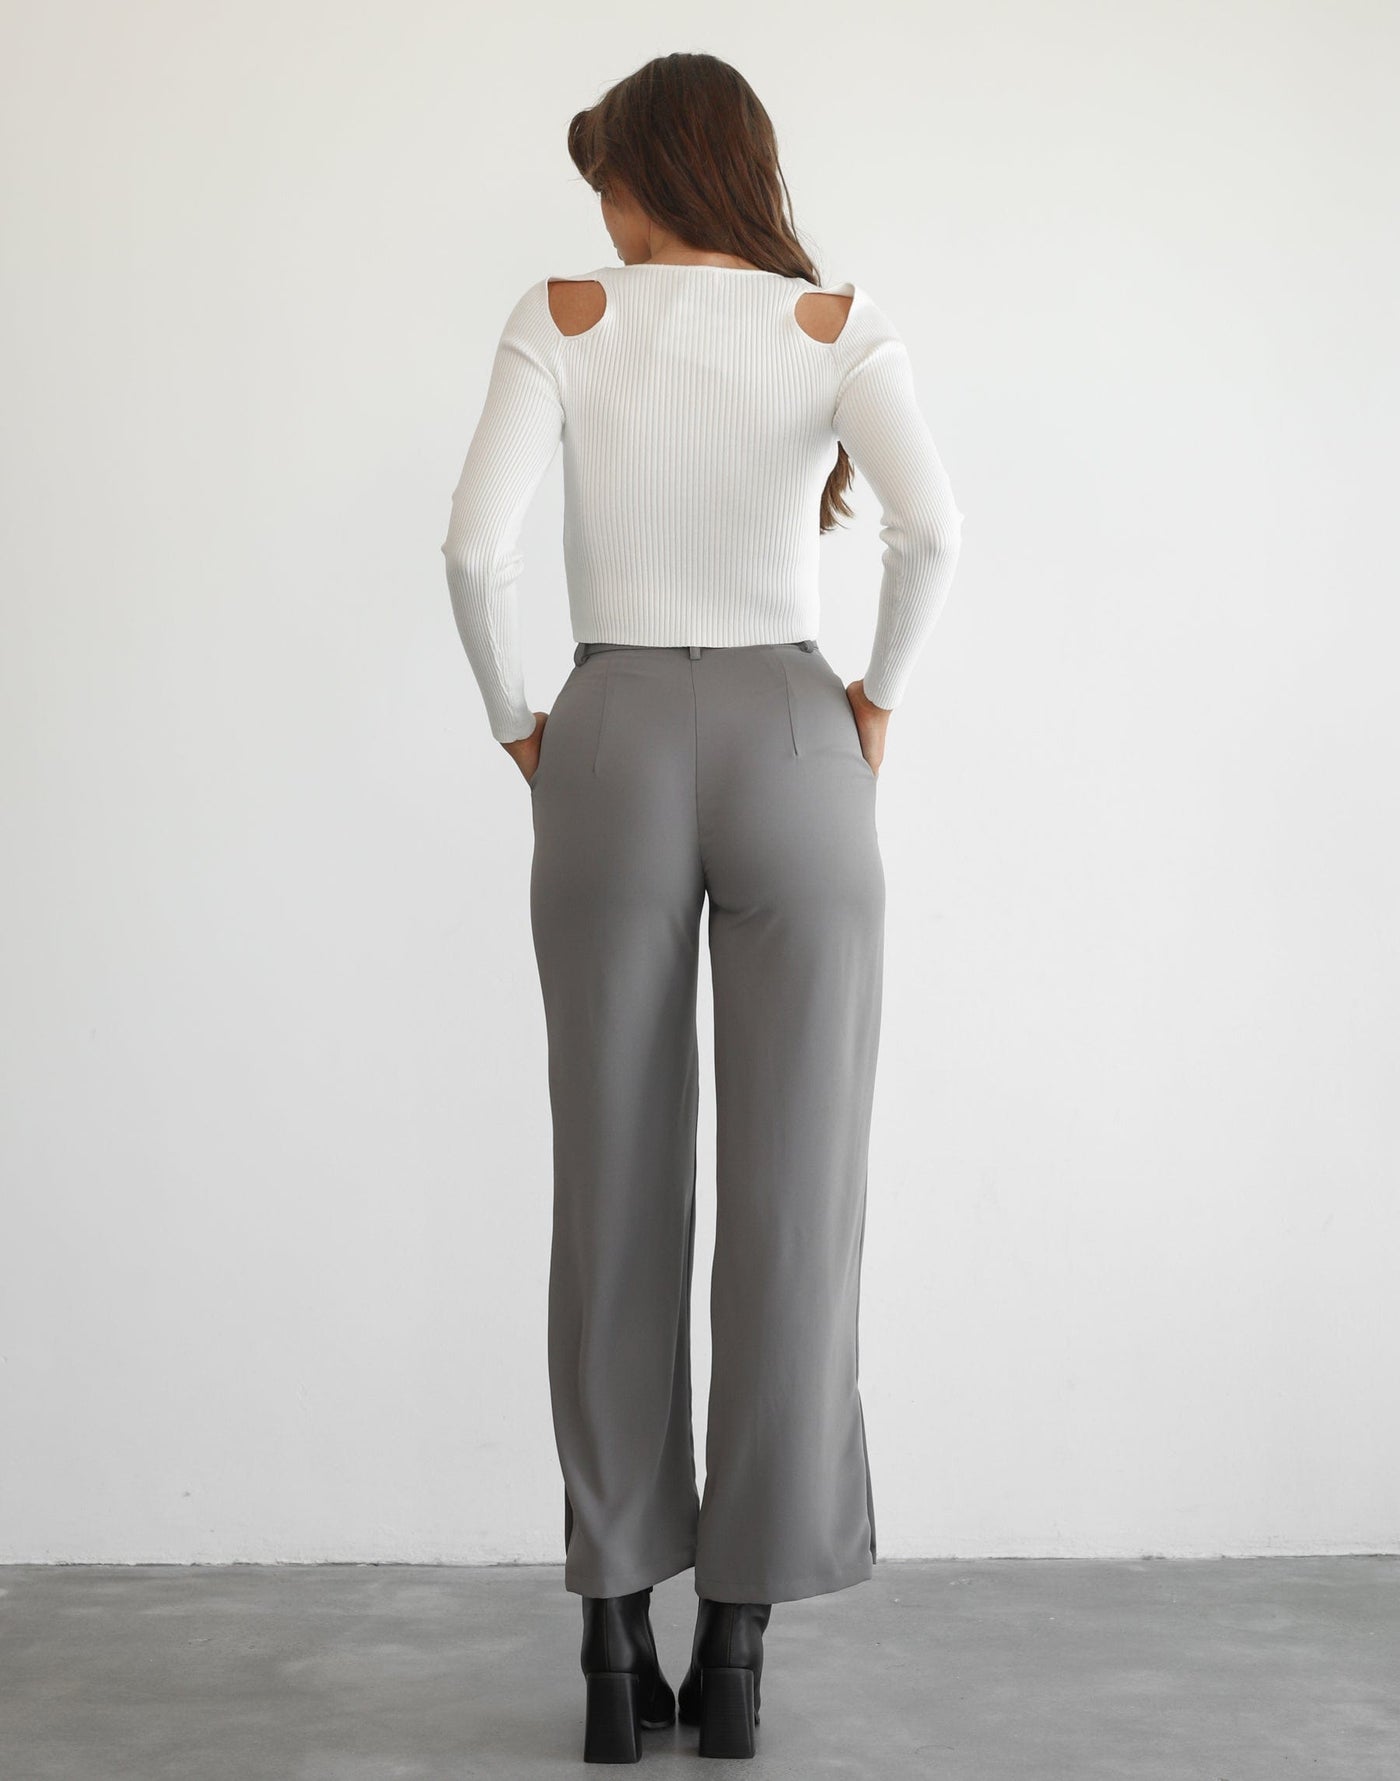 Celeste Long Sleeve Top (White) - White Long Sleeve Top - Women's Tops - Charcoal Clothing